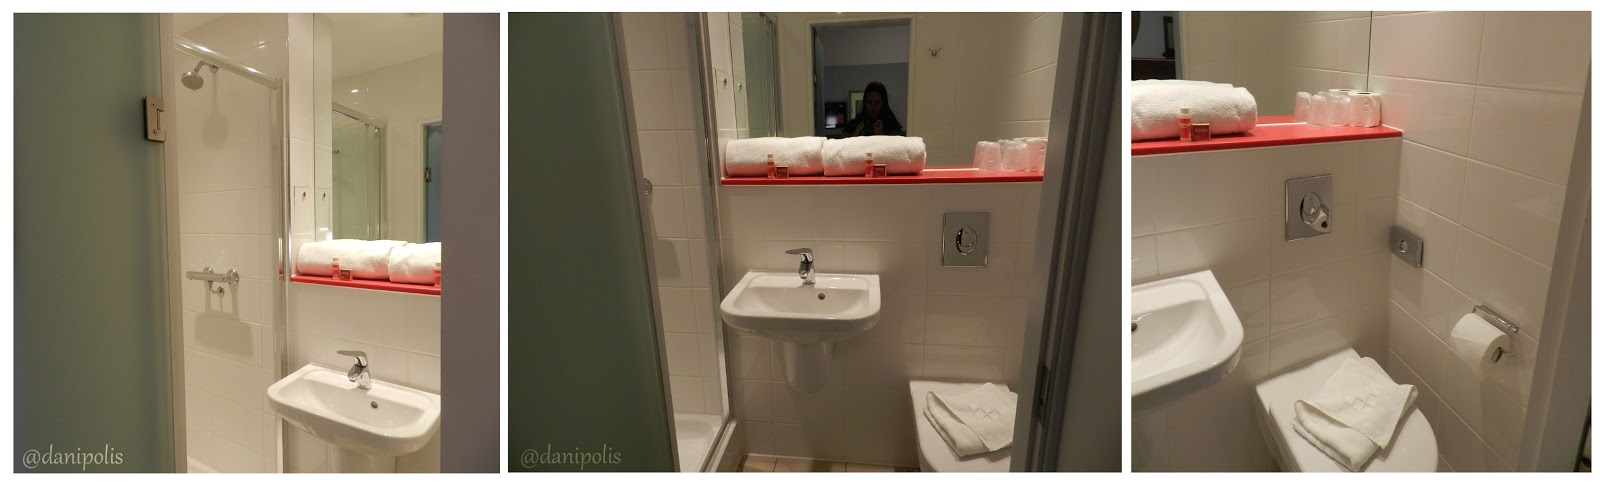 tunehotels_kingscross_bathroom